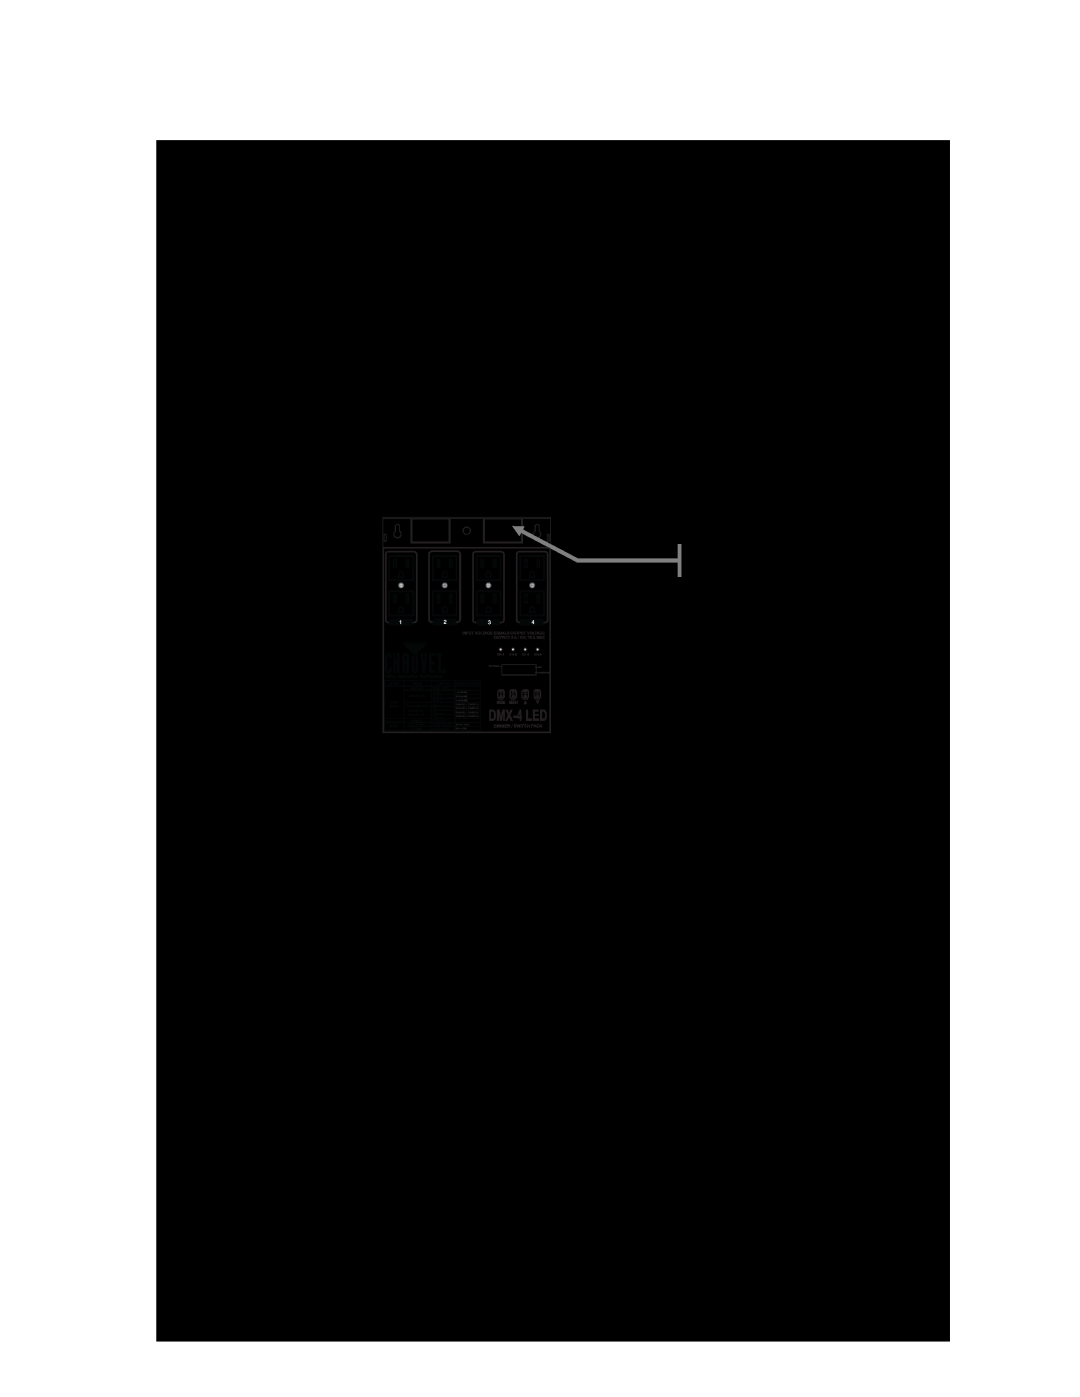 Chauvet DMX-4 LED user manual Mounting, Orientation, Rigging 